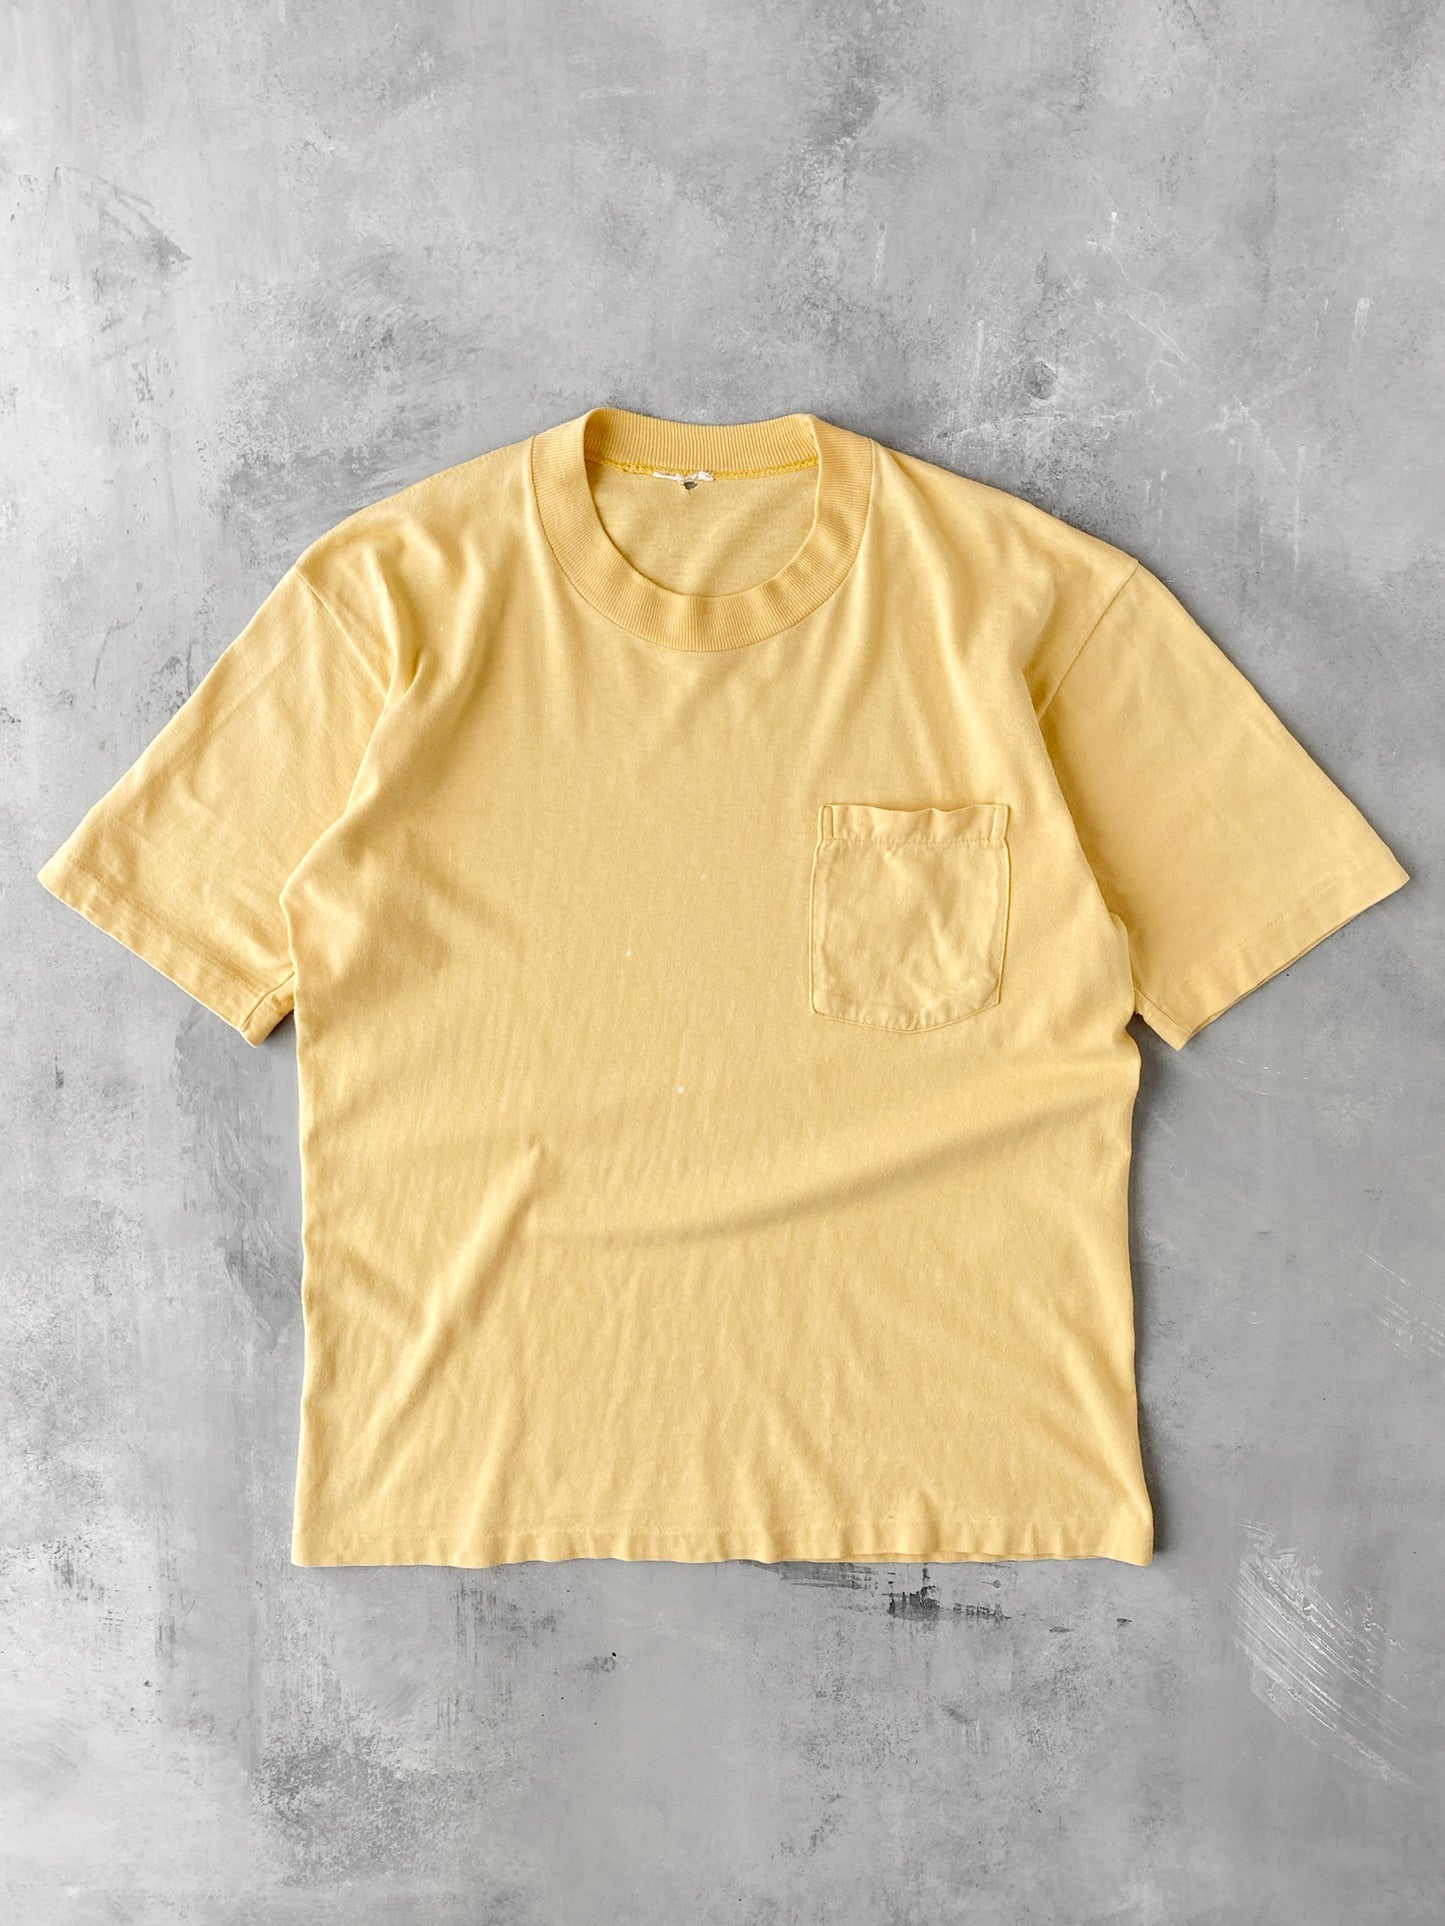 Yellow Pocket T-Shirt 80's - Medium / Large